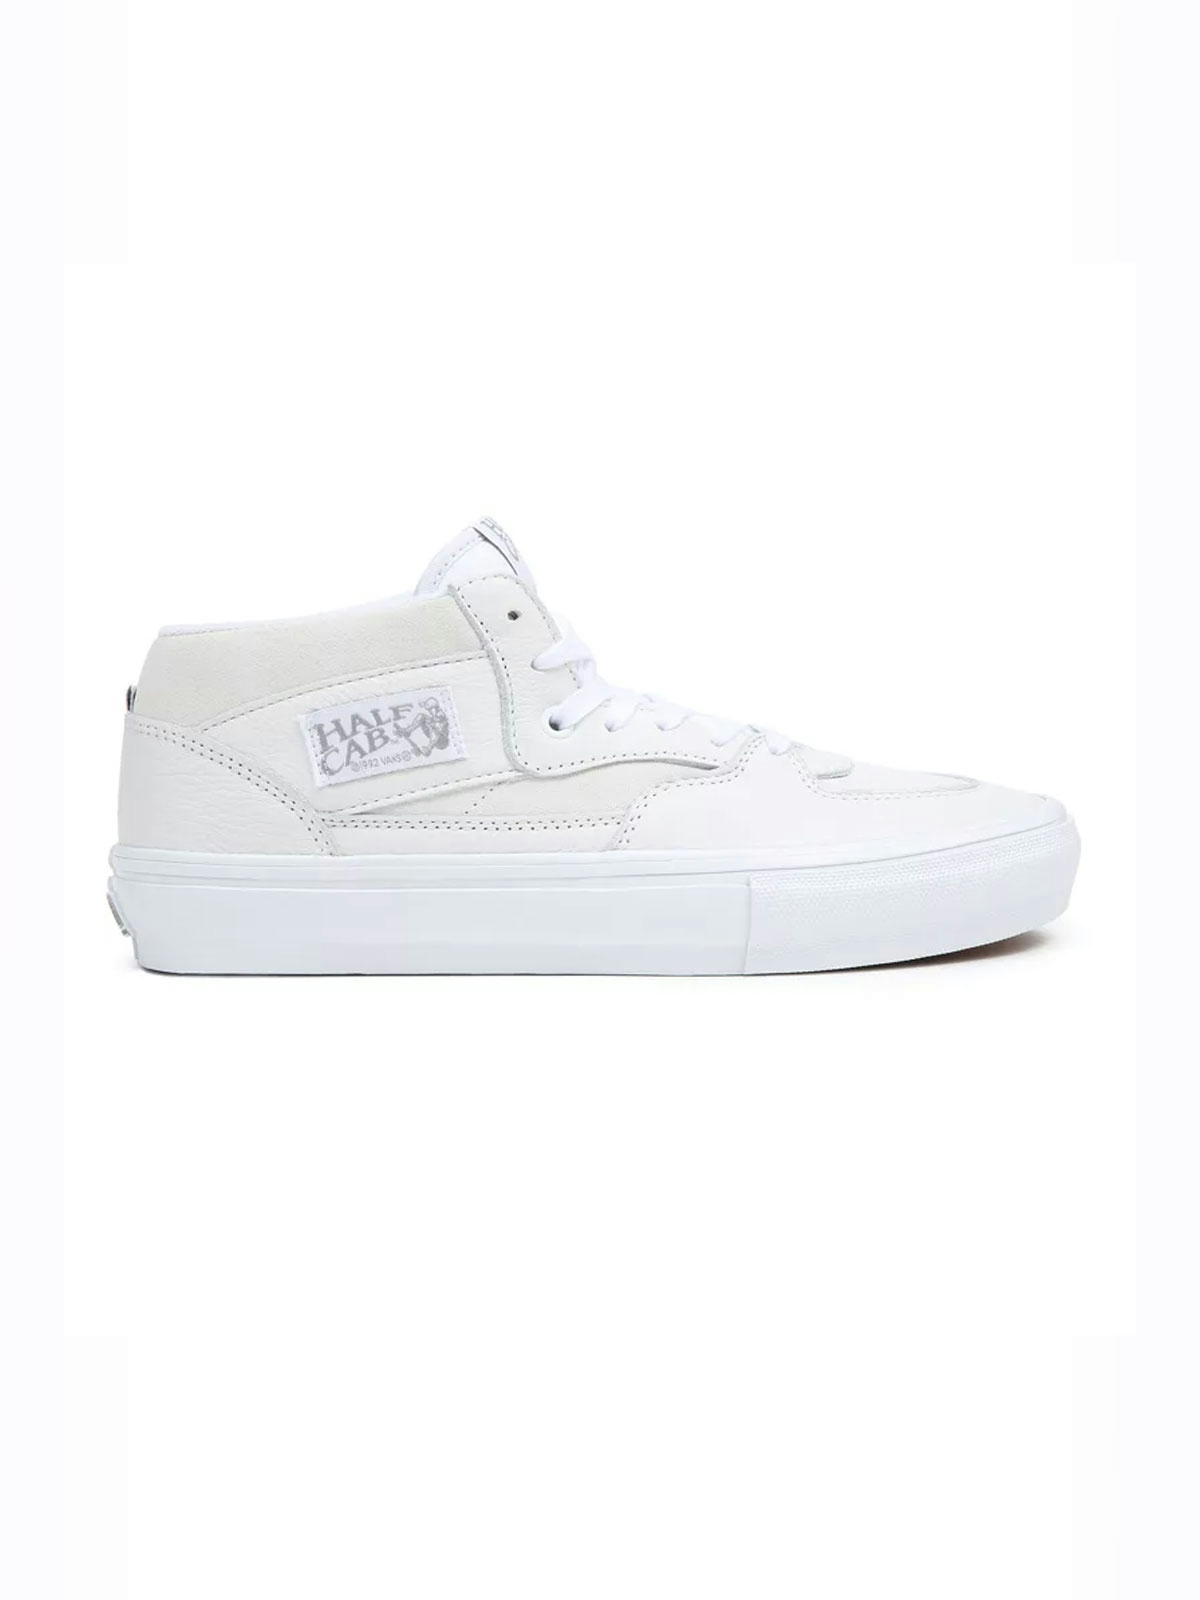 Vans Daz Skate Half Cab Shoes White/White 3